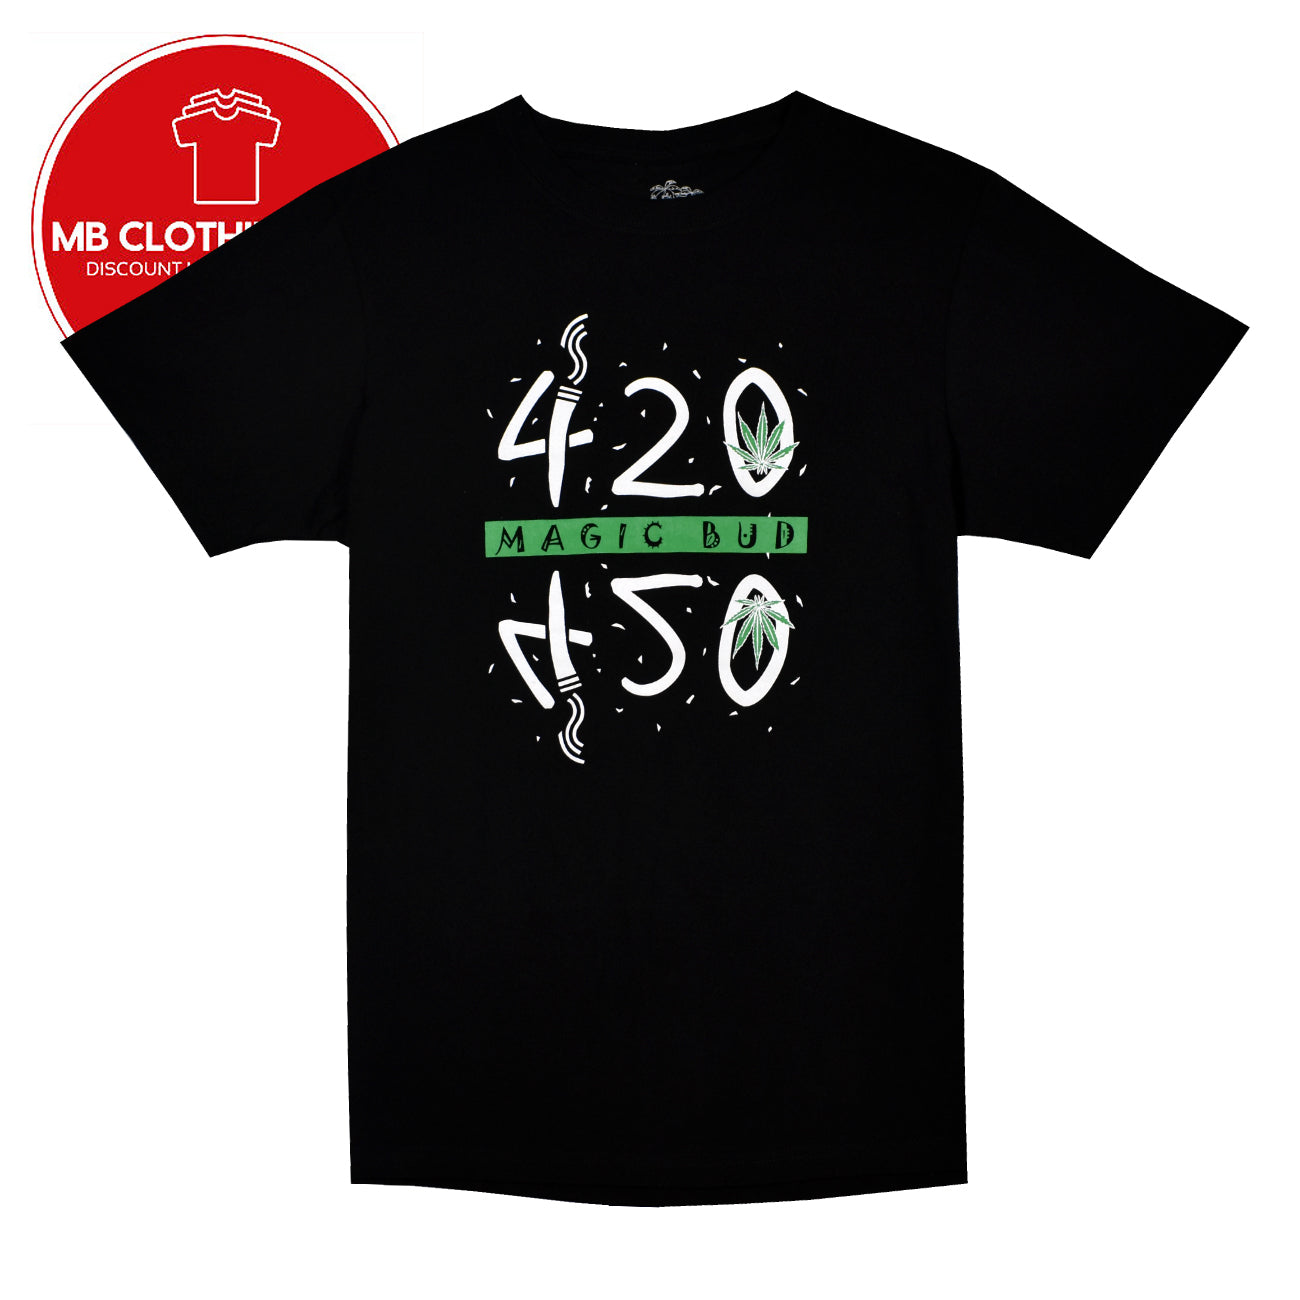 Men's T shirts MAGIC BUD 420 Original MB T-Shirts 100% Cotton Black & White WEED